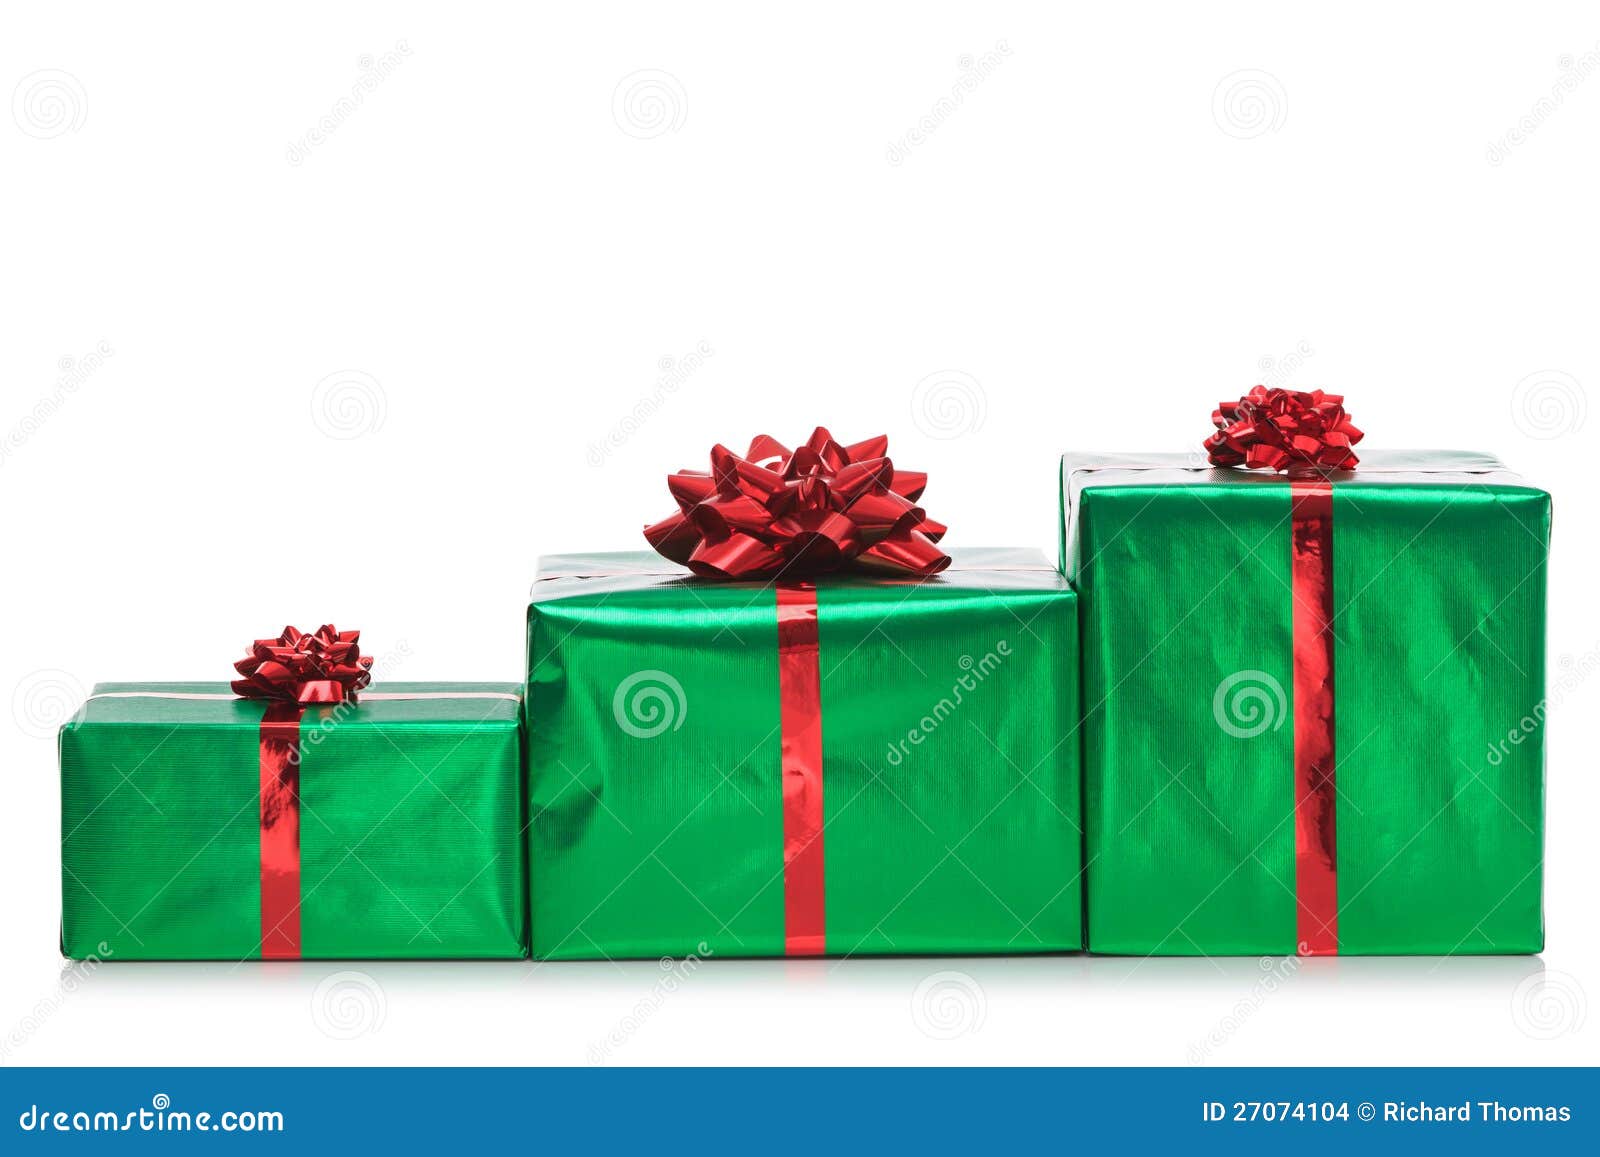 three presents in a row